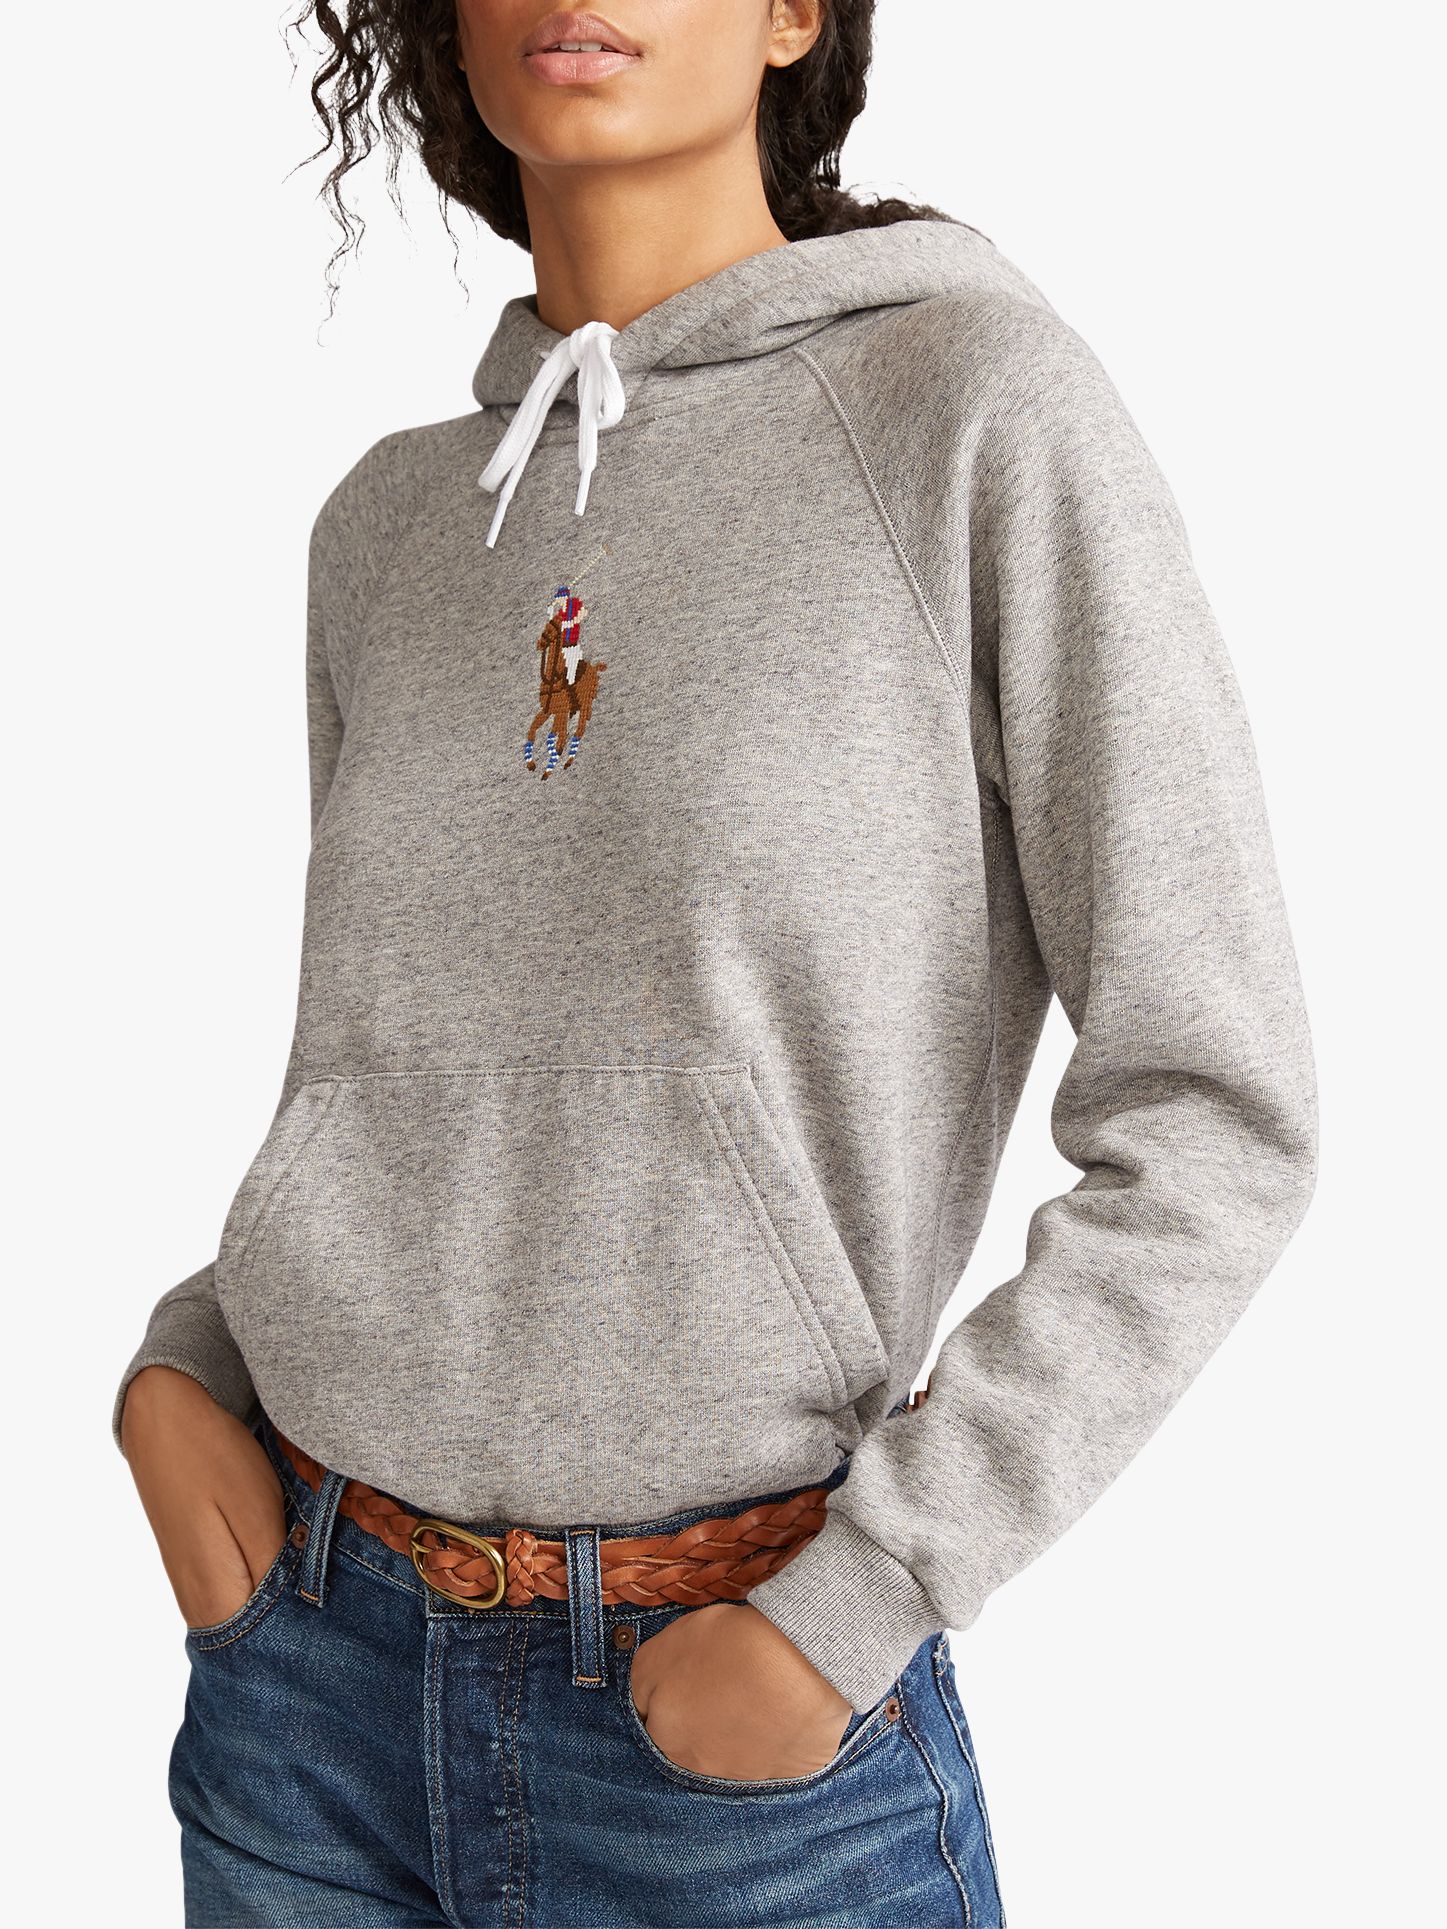 polo ralph lauren hoodie womens